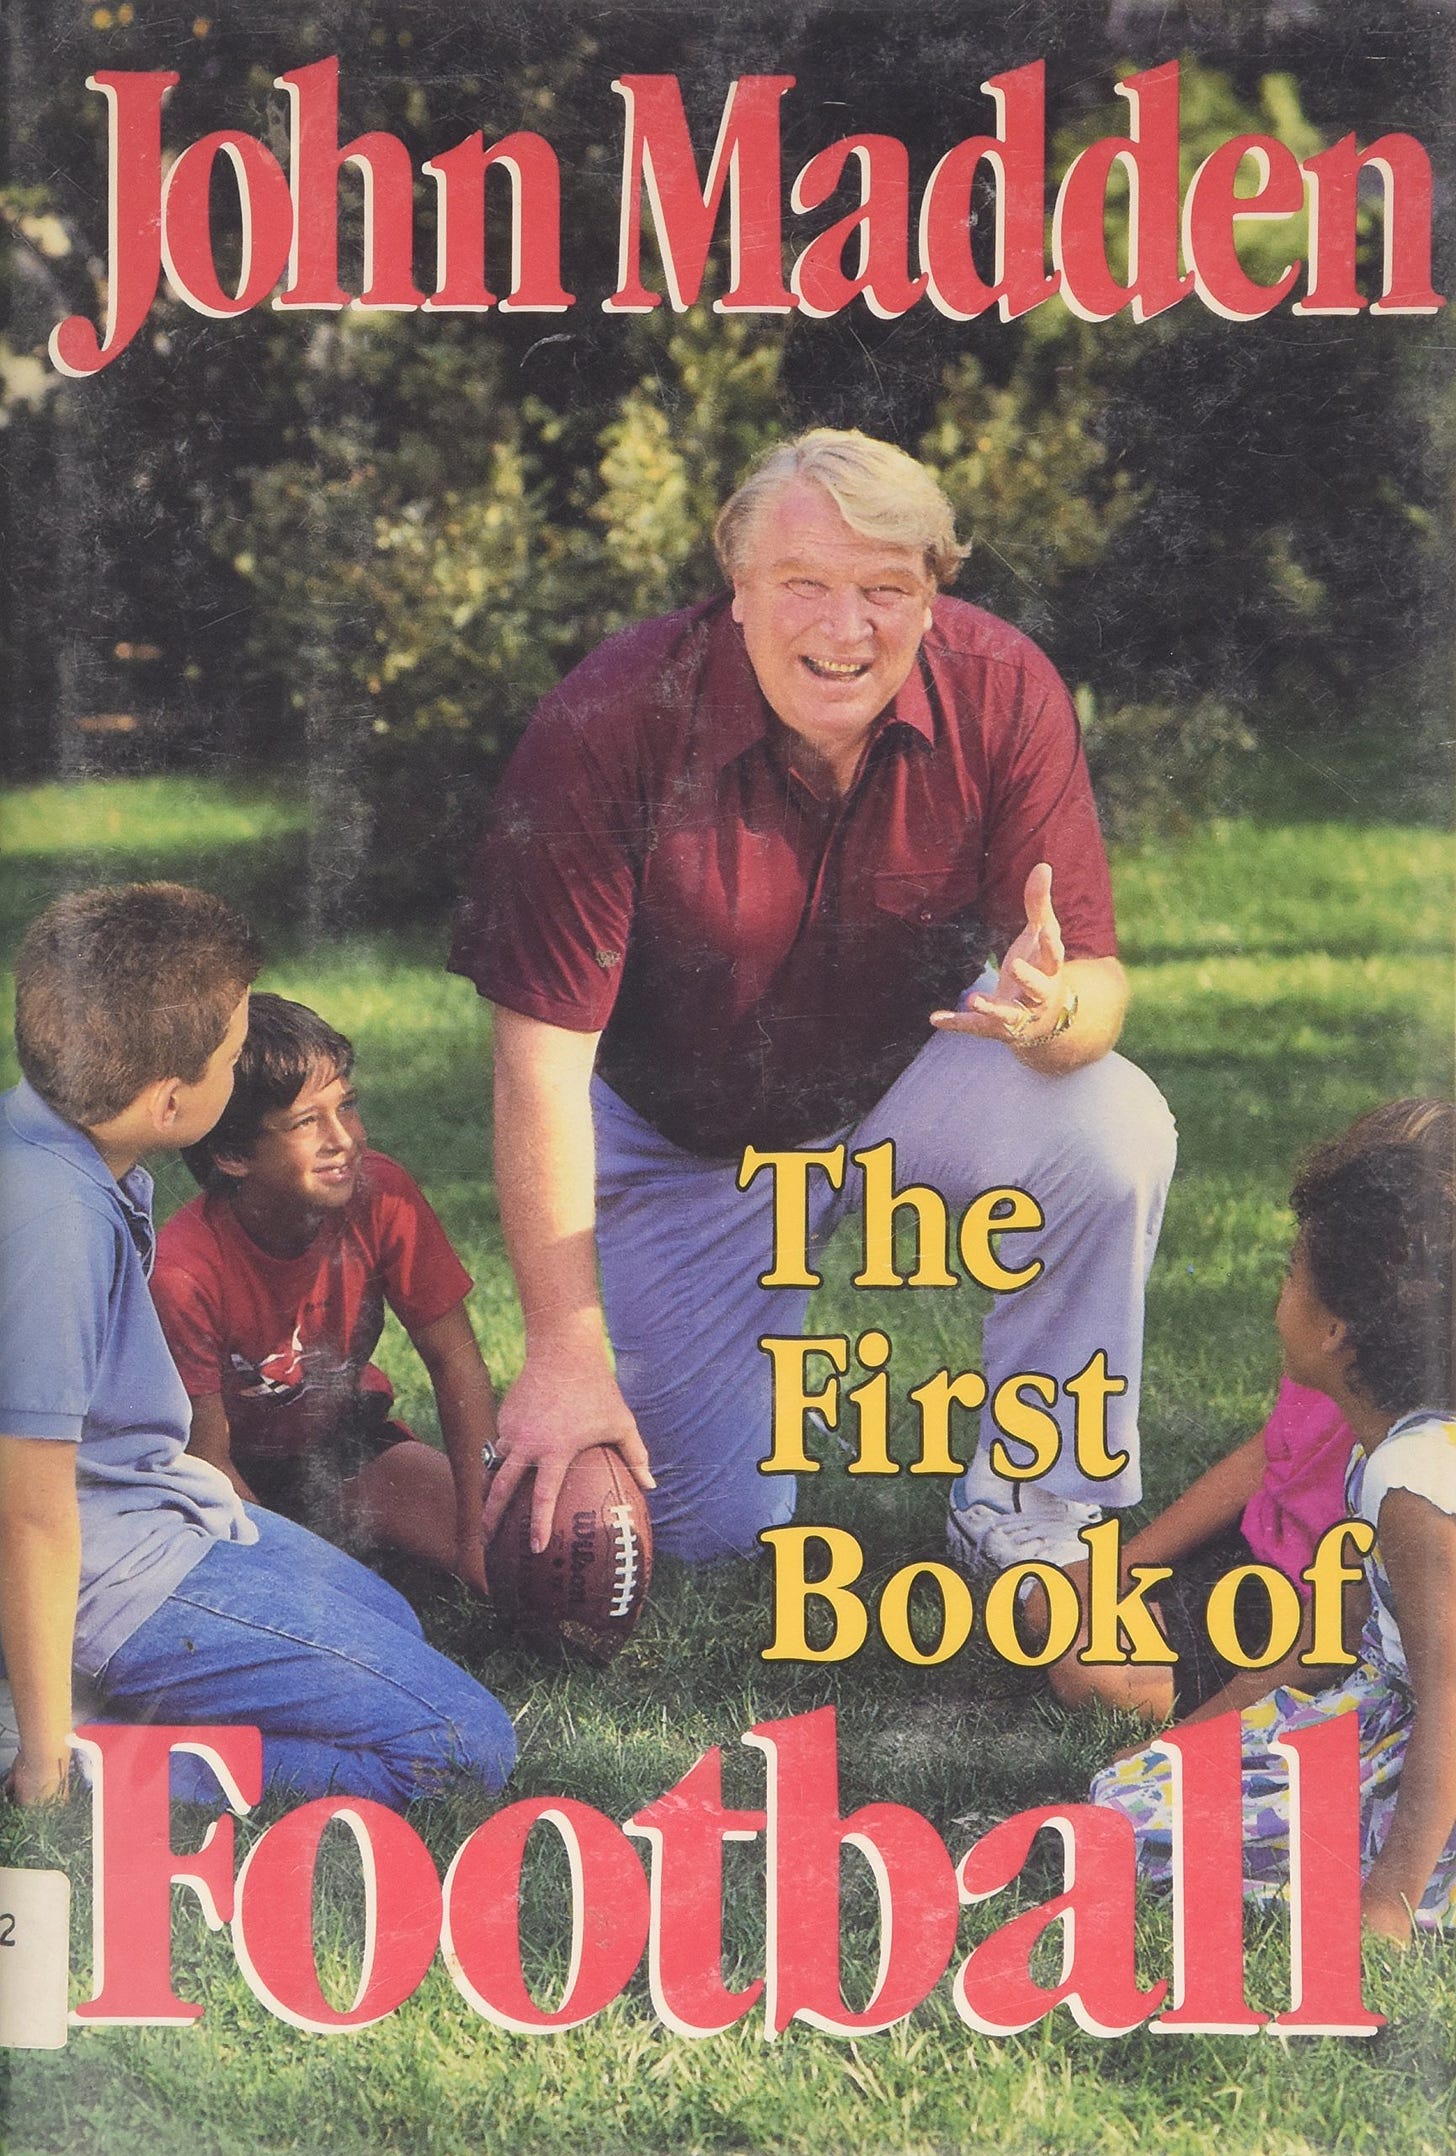 The First Book of Football: Madden, John: 9780517569818: Amazon.com: Books